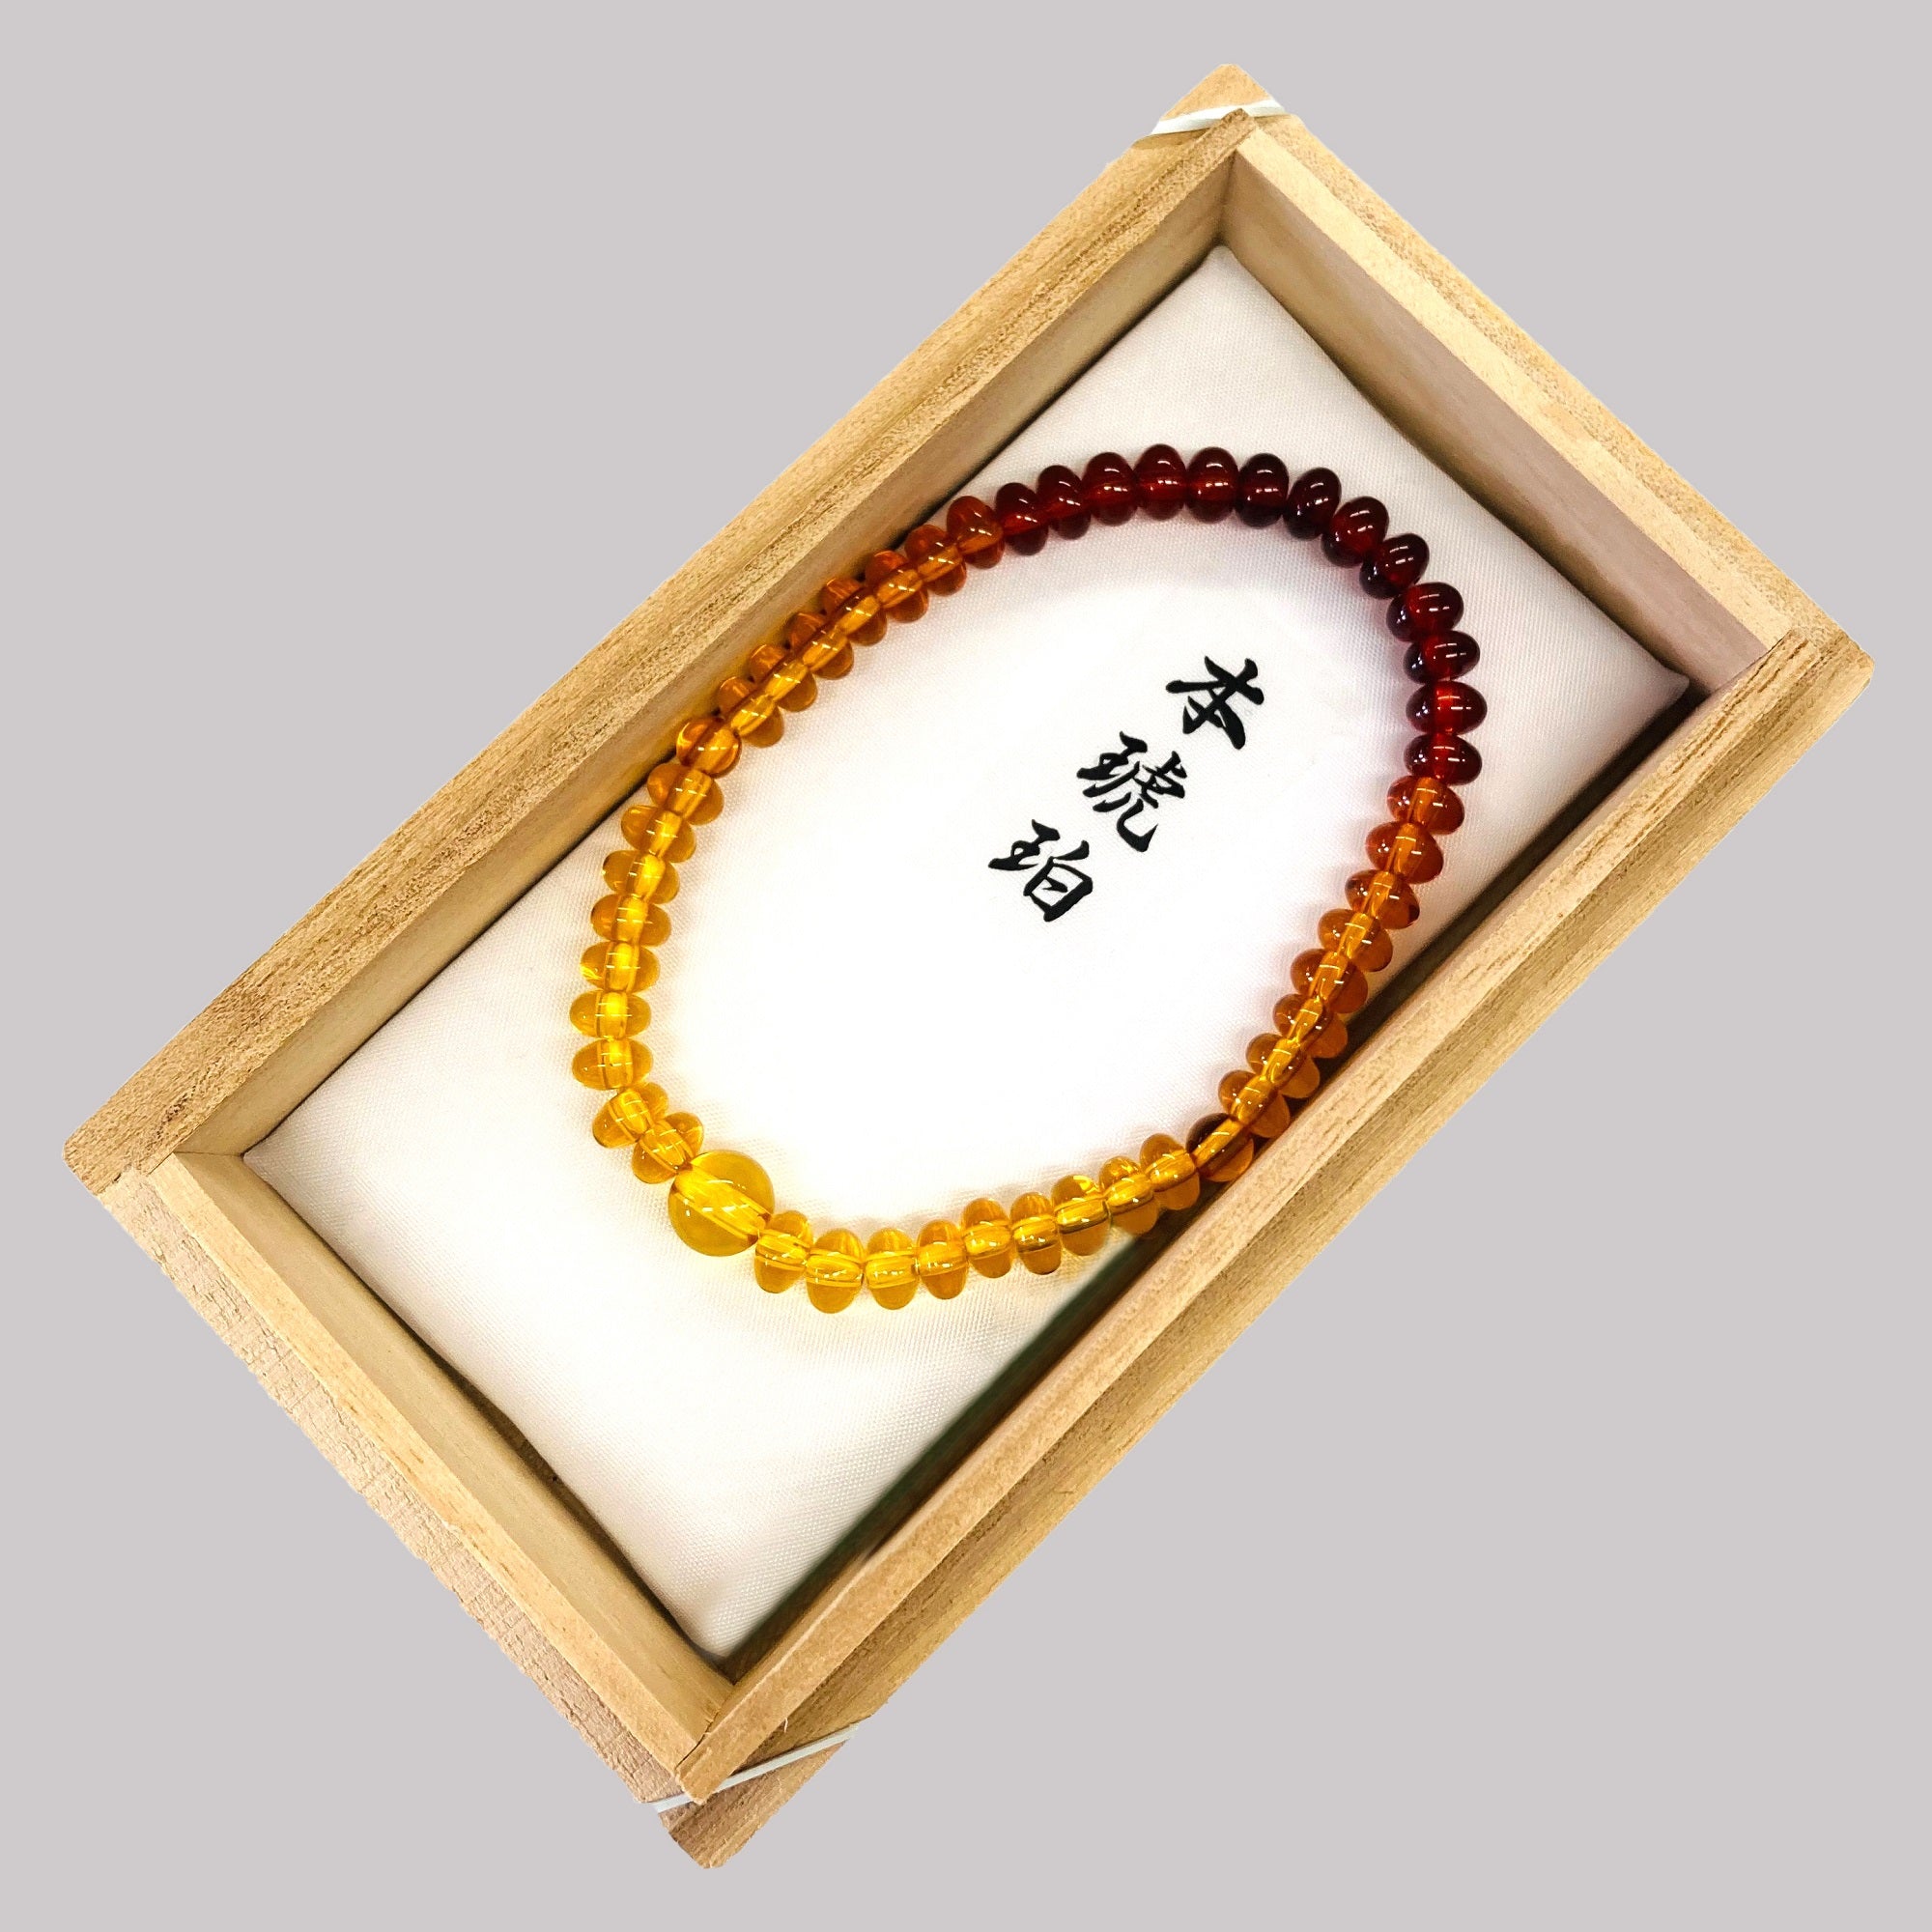 [One of a kind] 6×4mm Amber Gradation Flat Beads Bracelet